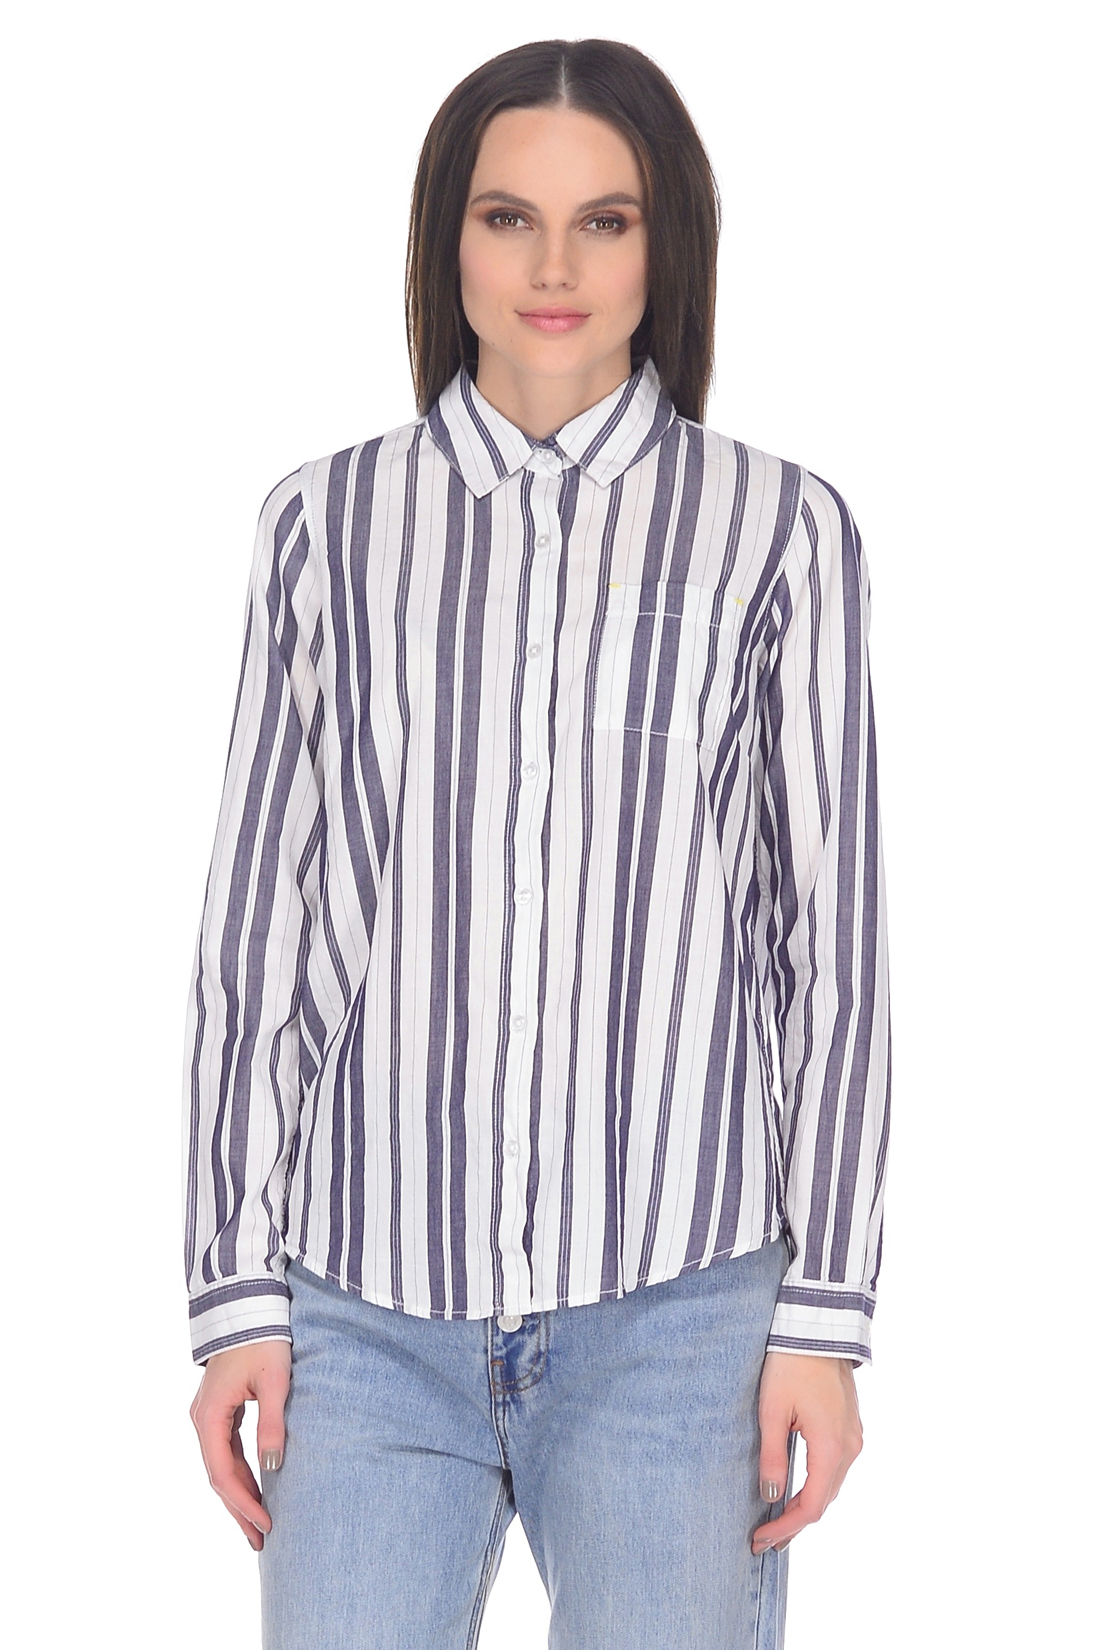 Рубашка в широкую полоску (арт. baon B178060), размер L, цвет белый Рубашка в широкую полоску (арт. baon B178060) - фото 1